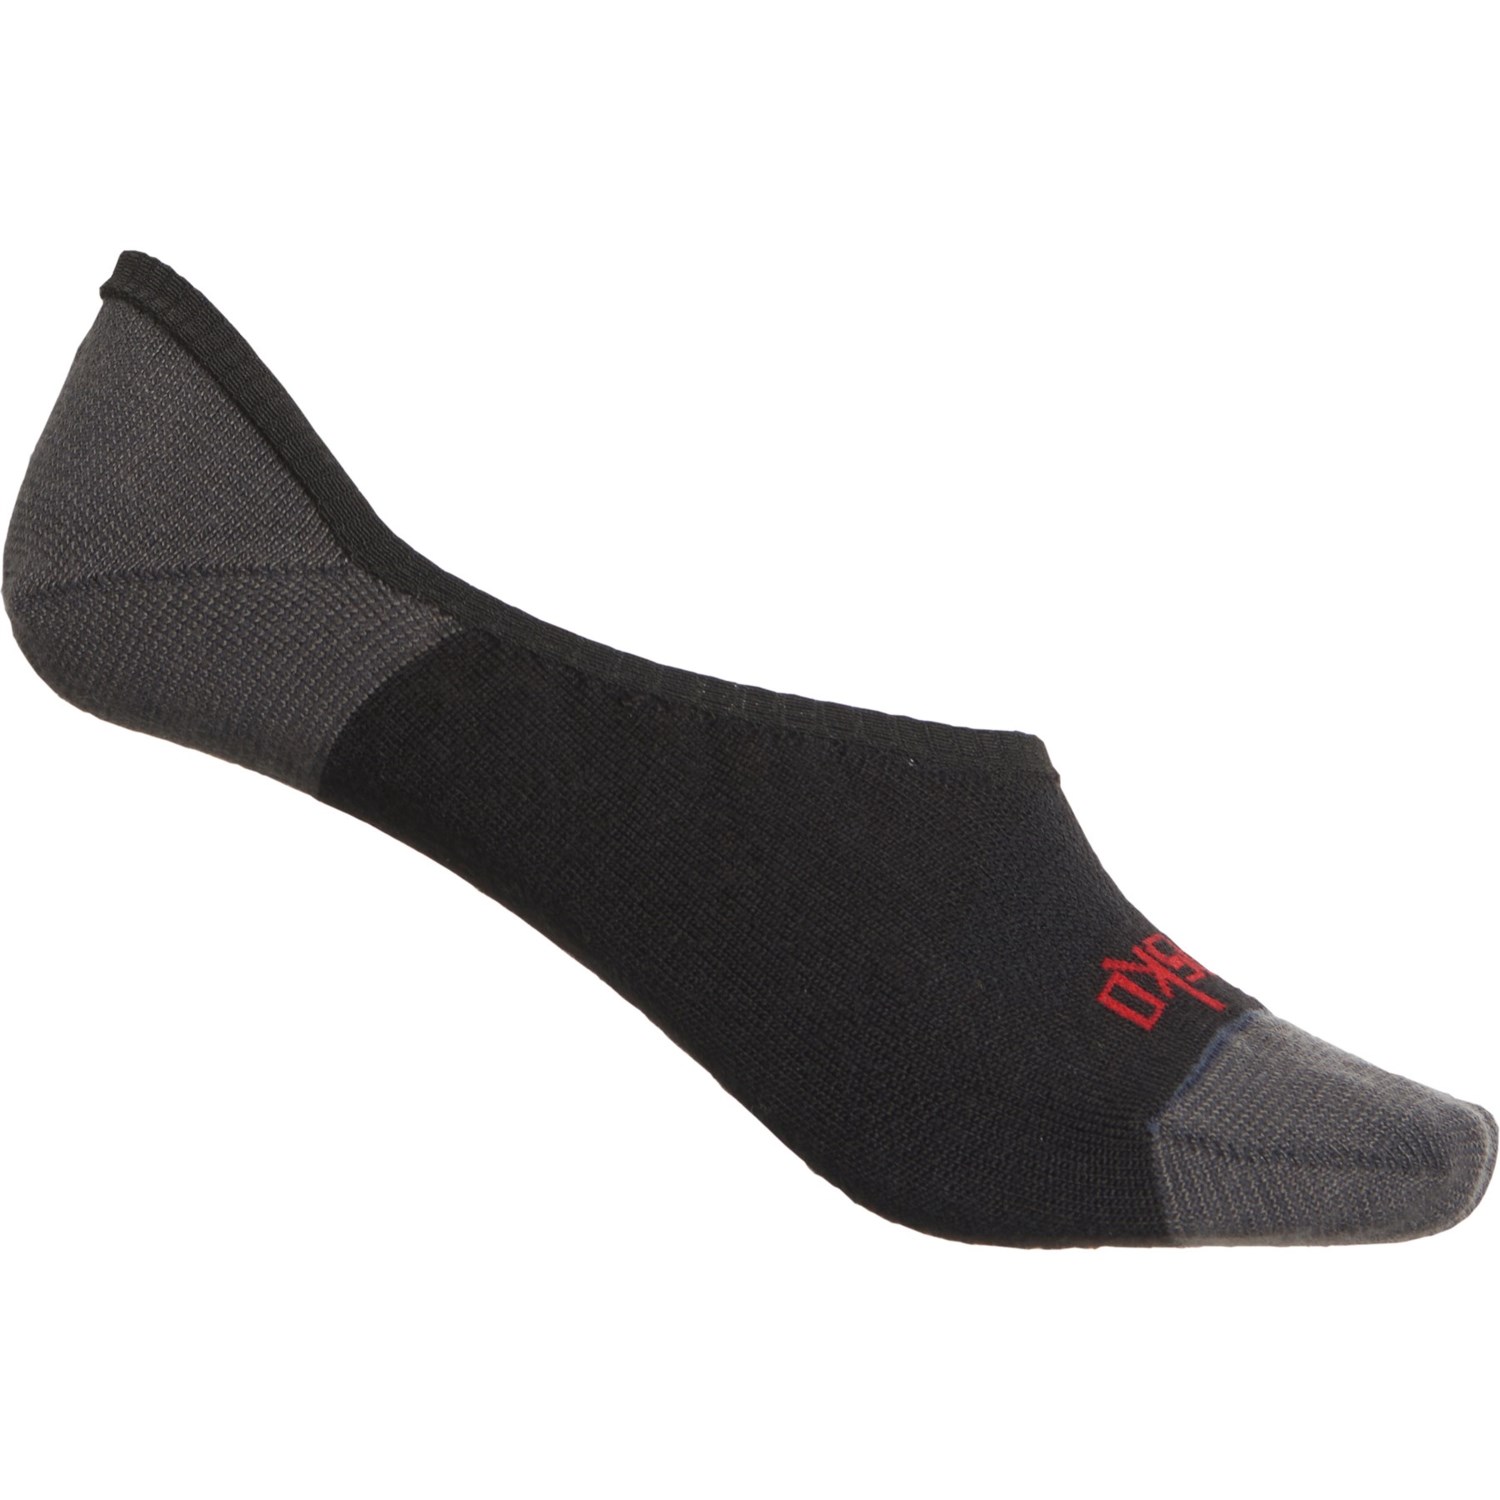 Dansko Two-Tone Ultra Lightweight No-Show Socks (For Women) - Save 50%